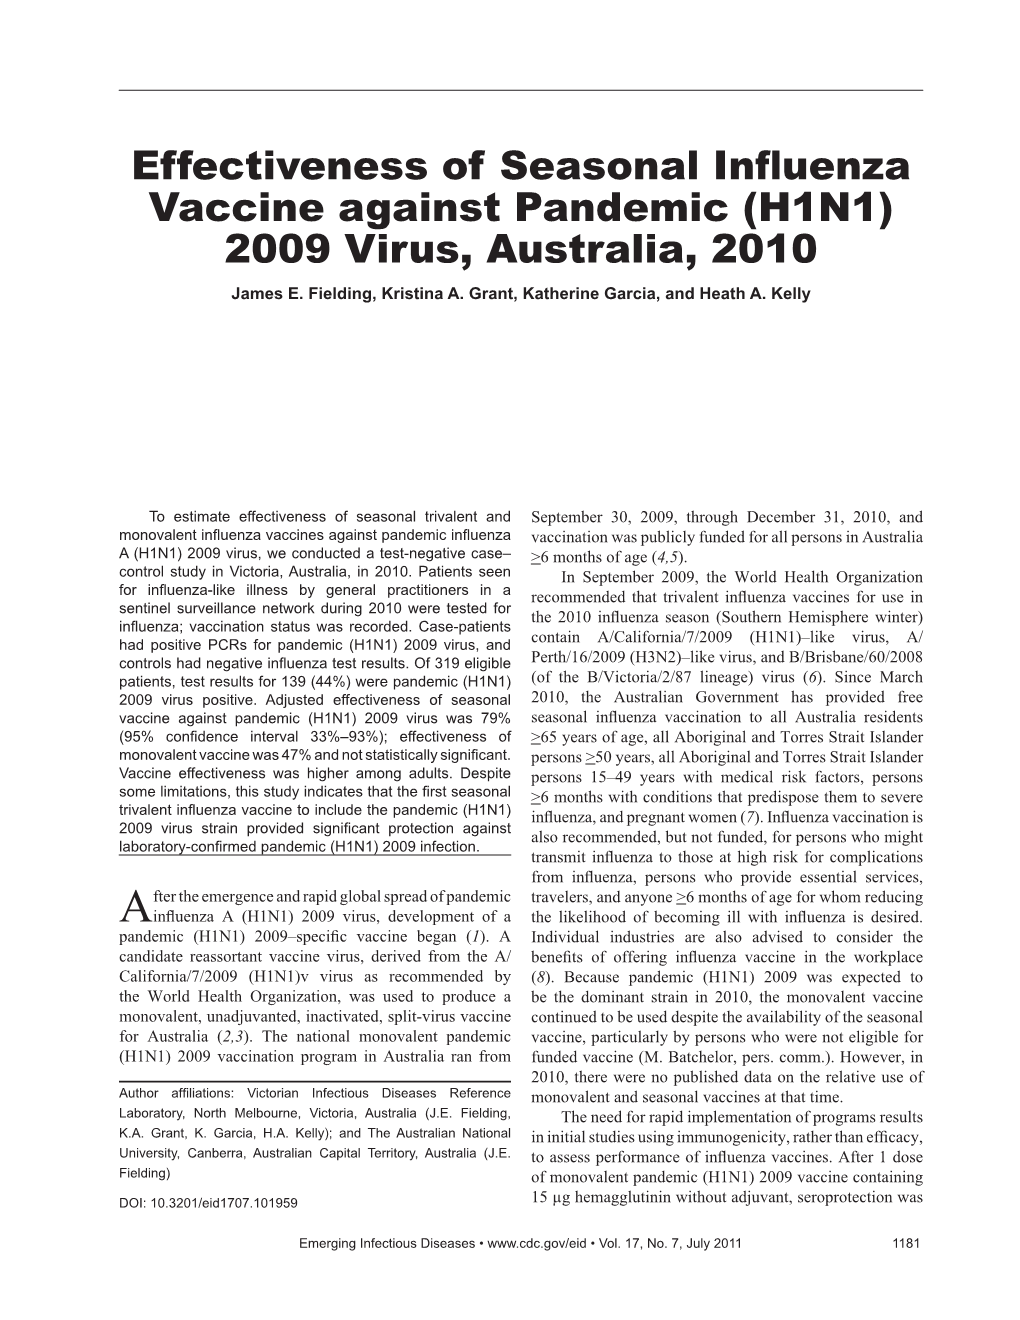 Effectiveness of Seasonal Influenza Vaccine Against Pandemic (H1N1)